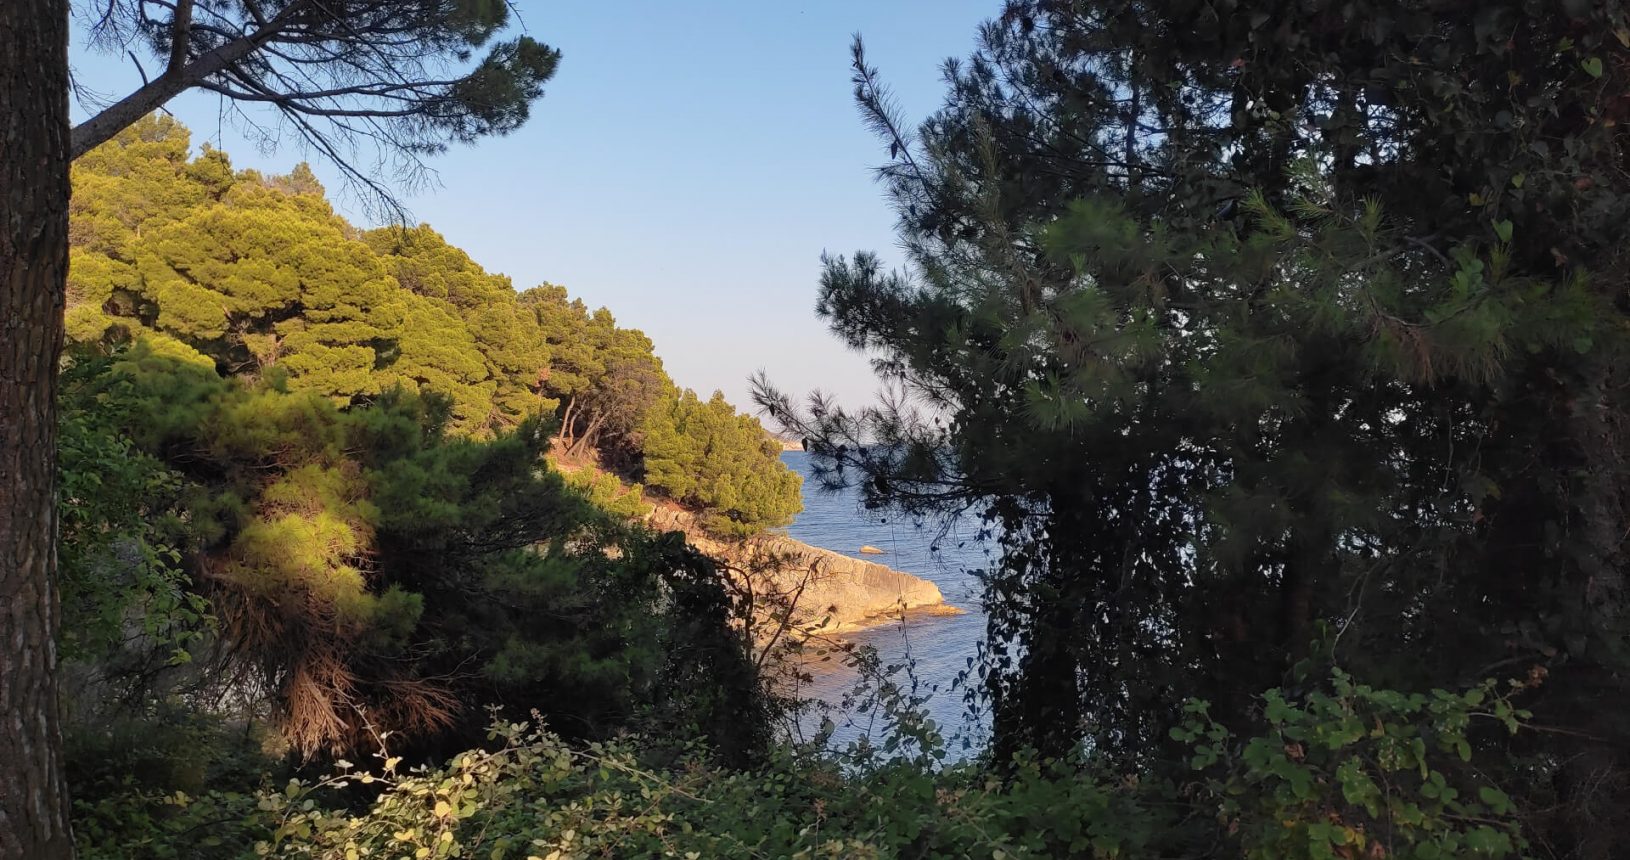 Ulcinj hiking trail coastline from between trees